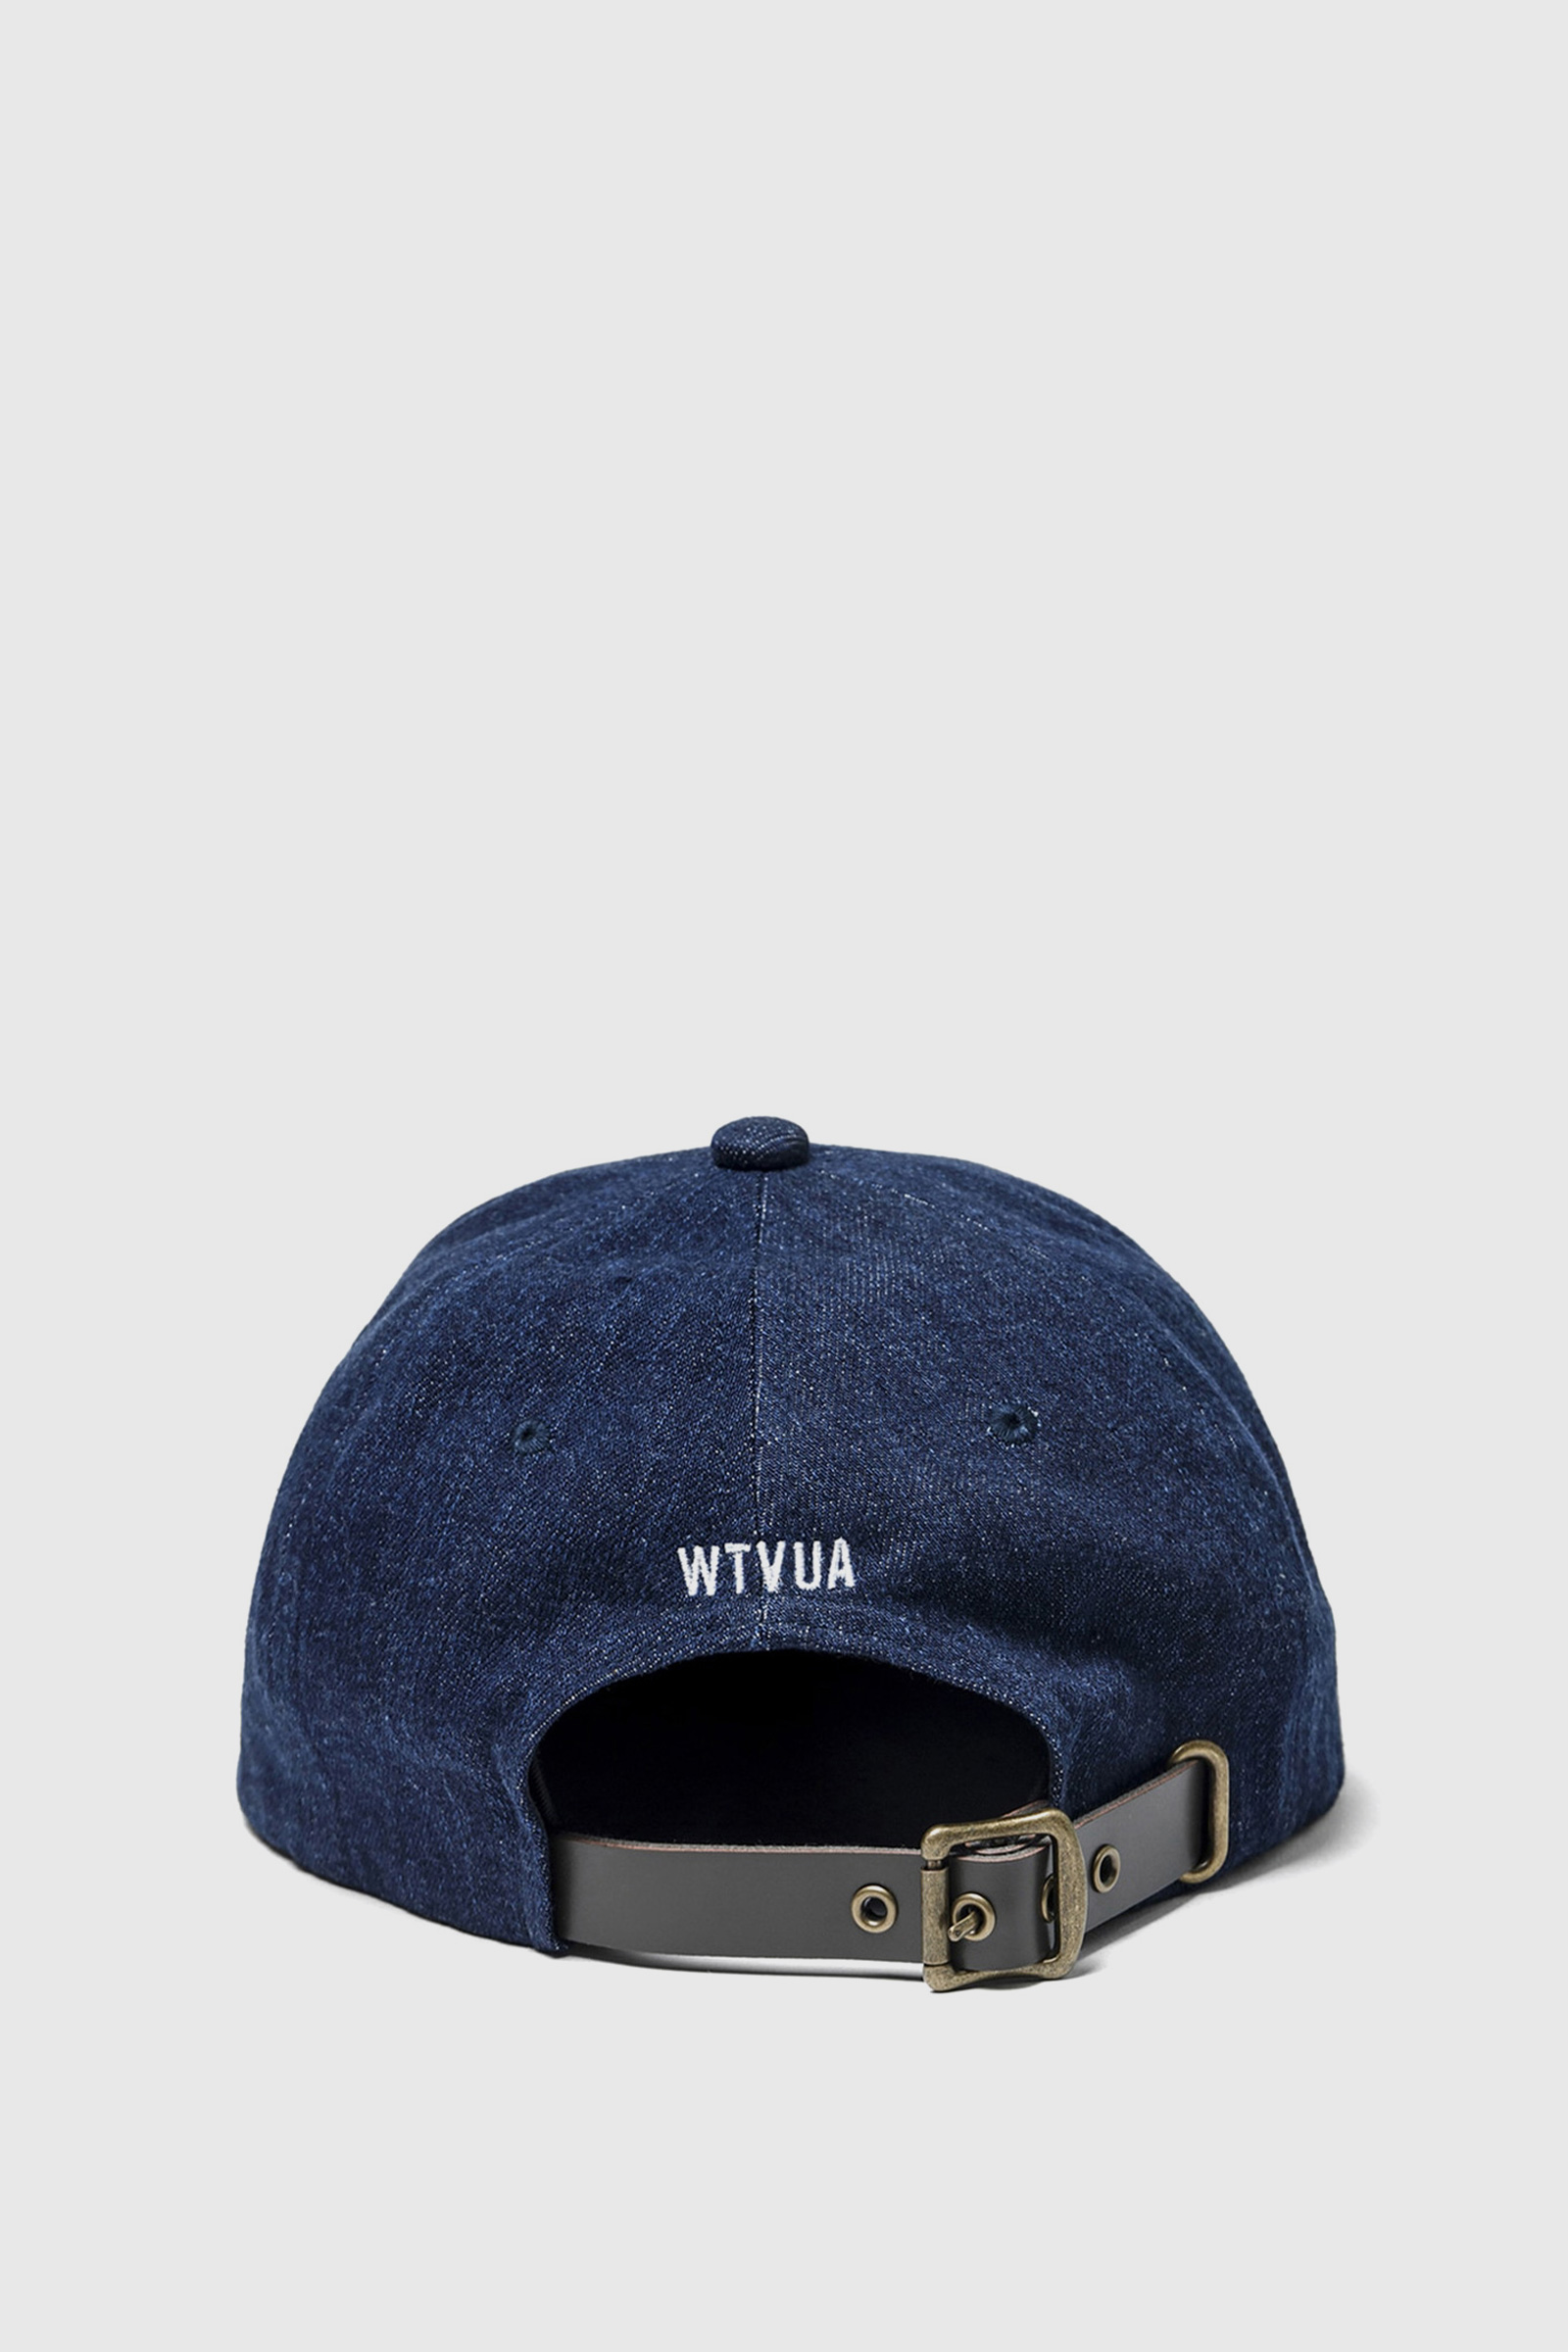 WTAPS T-6H 03 / CAP / COTTON TWILL LEAGUE キャップ 帽子 NEWERA